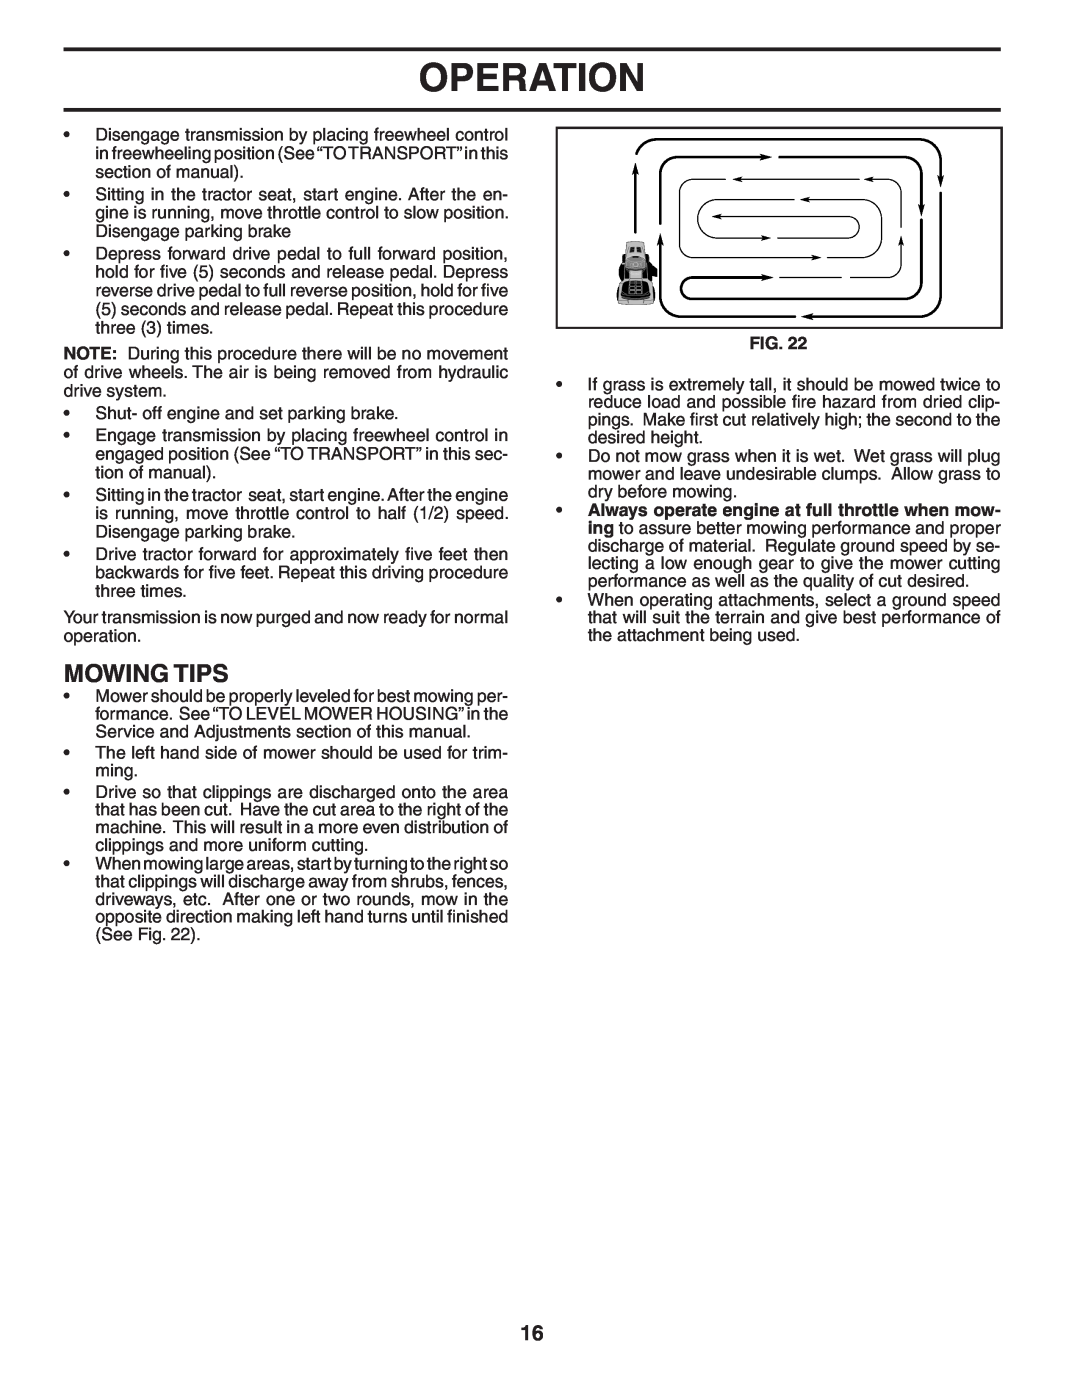 Poulan 405035 manual Mowing Tips, Operation 